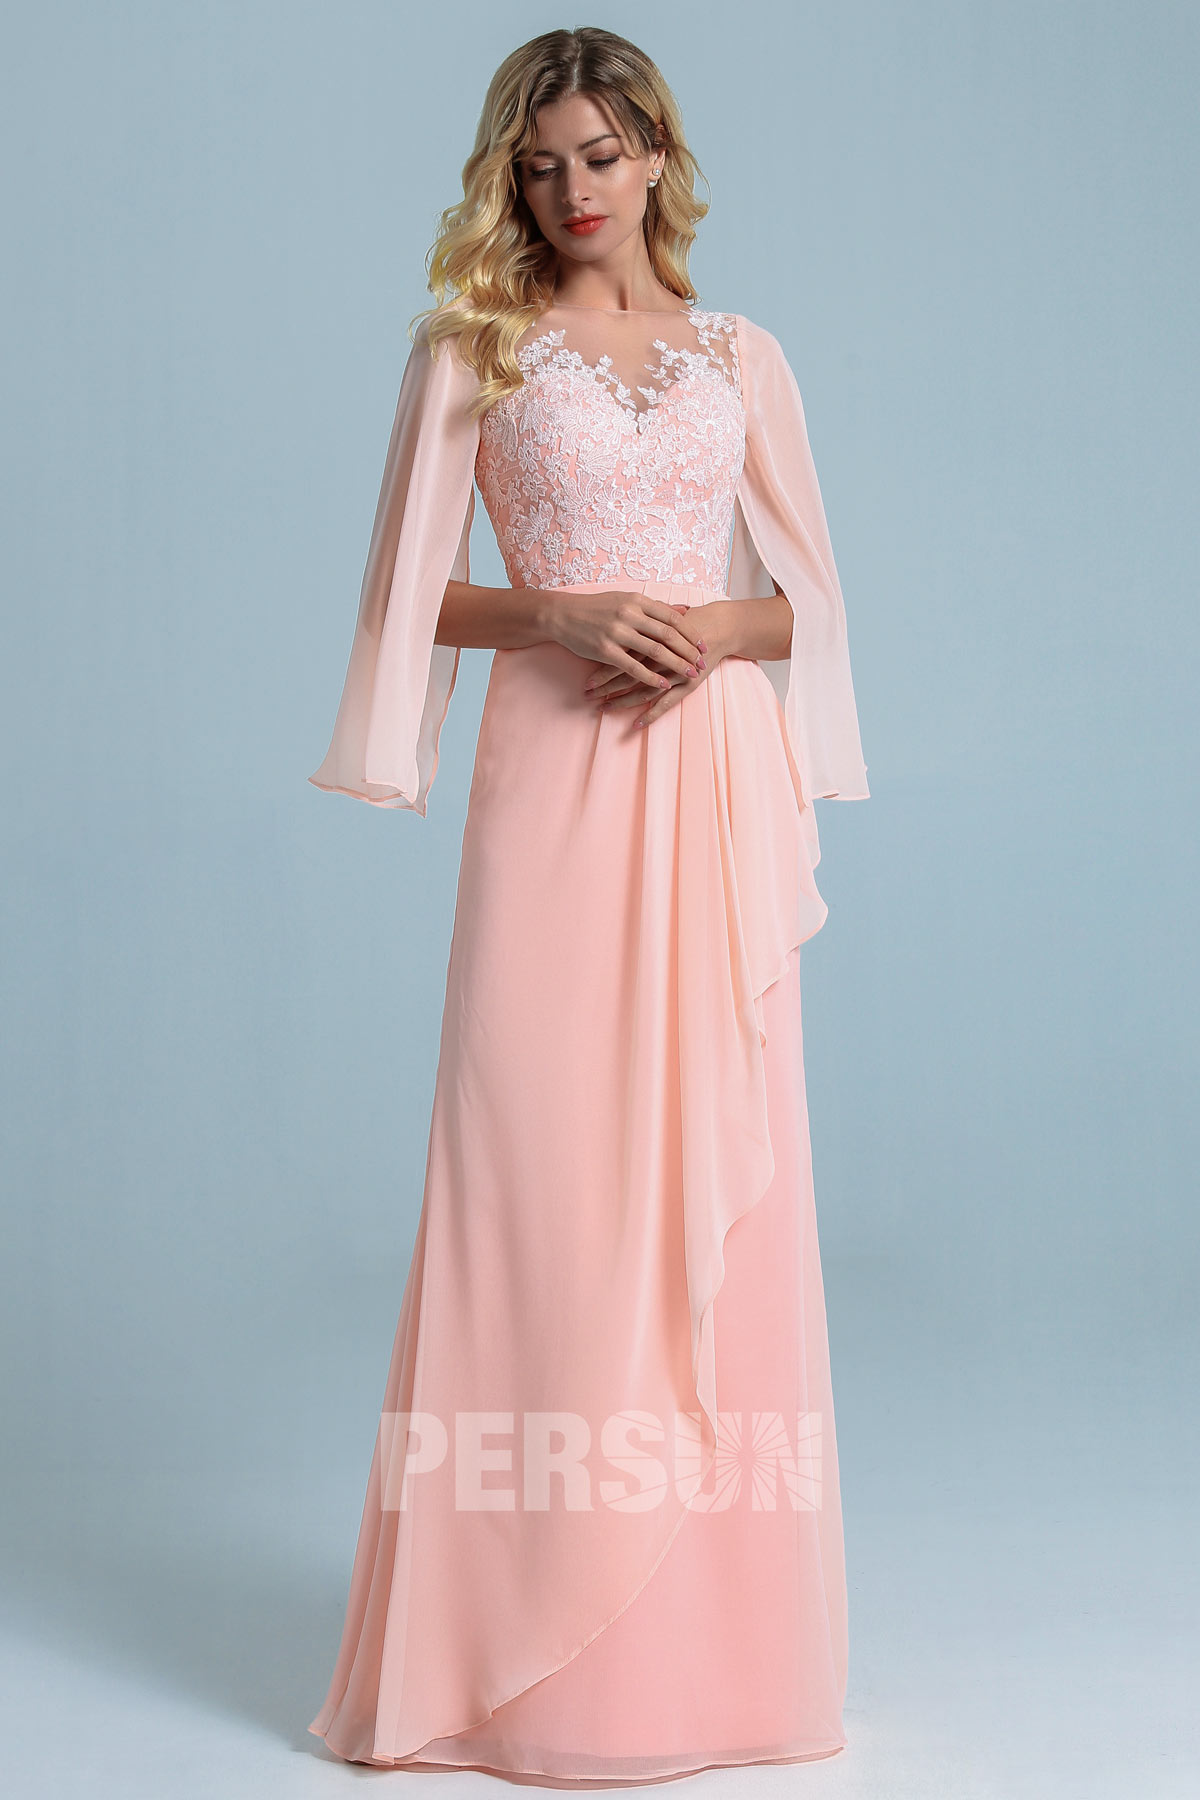 elegante-robe-soiree-long-rose-pale-2020-persun.jpg?profile=RESIZE_710x